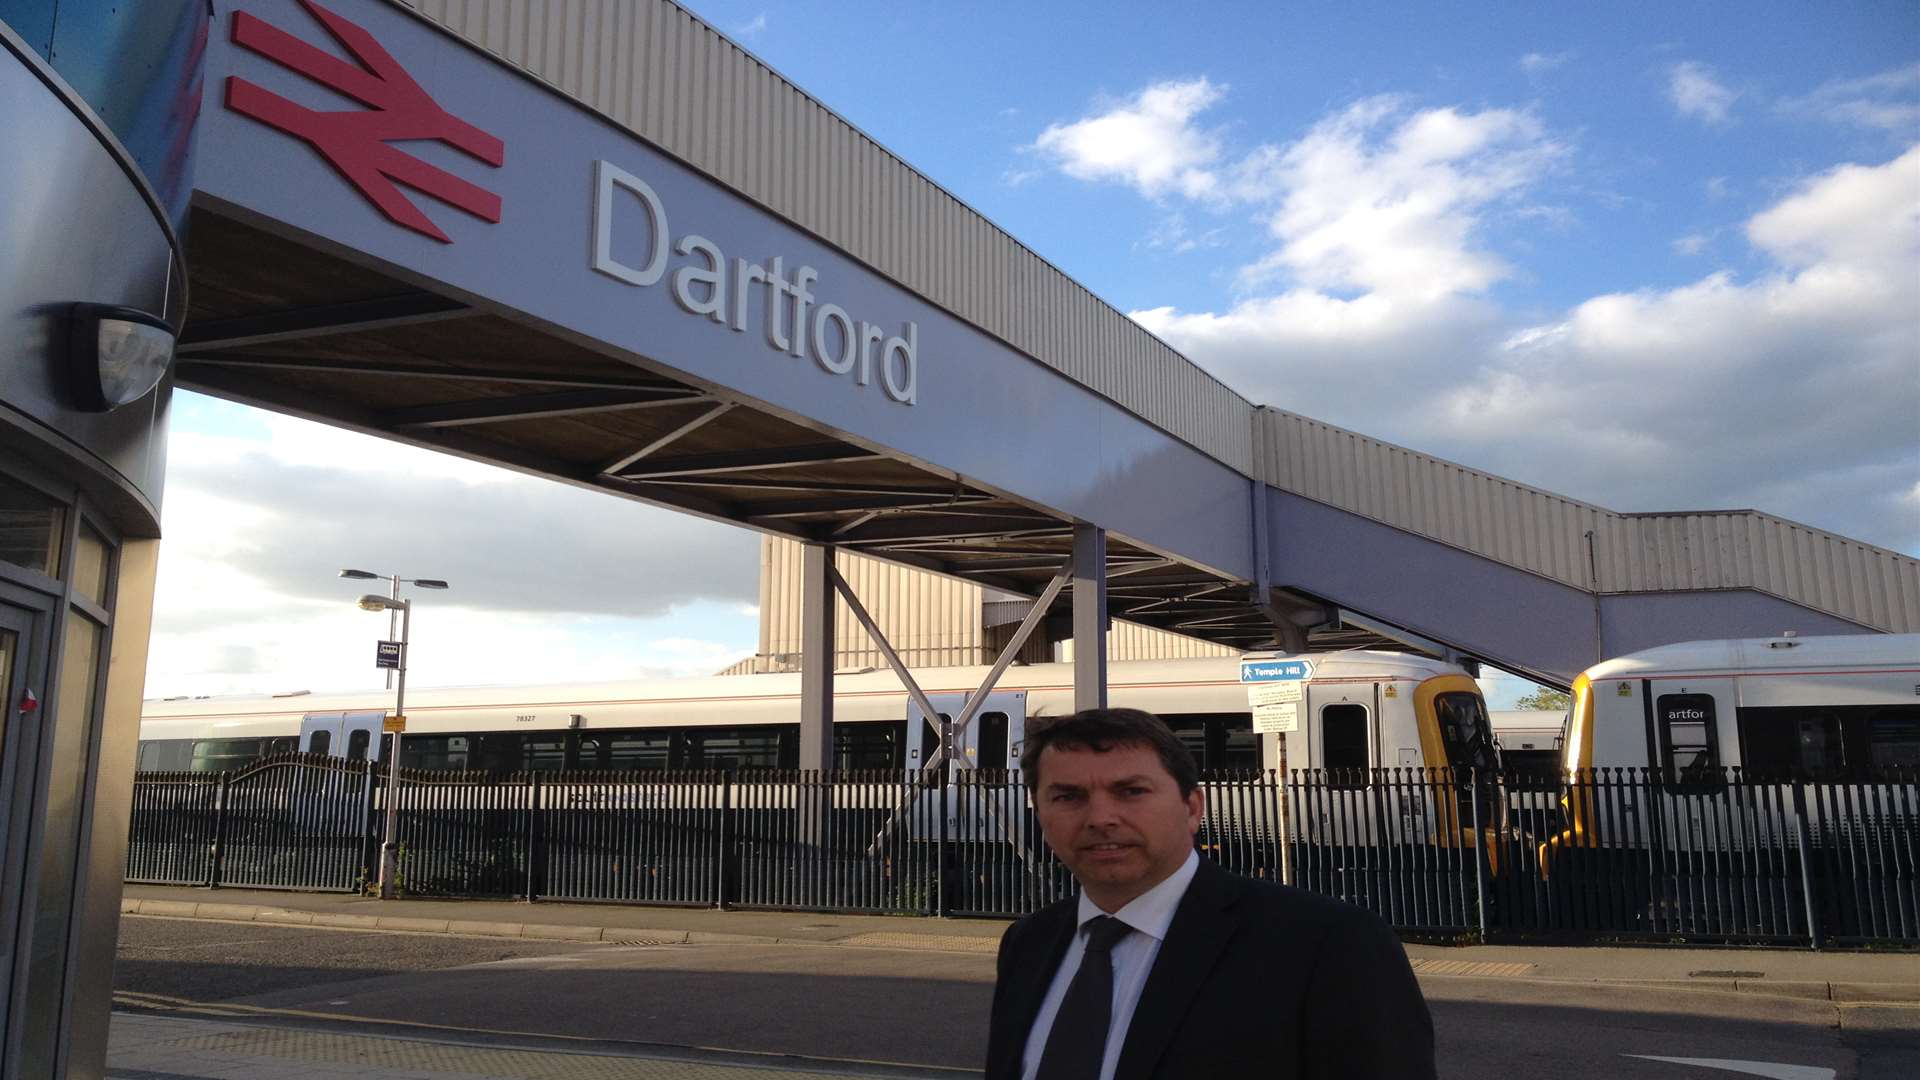 Dartford MP Gareth Johnson at the train station